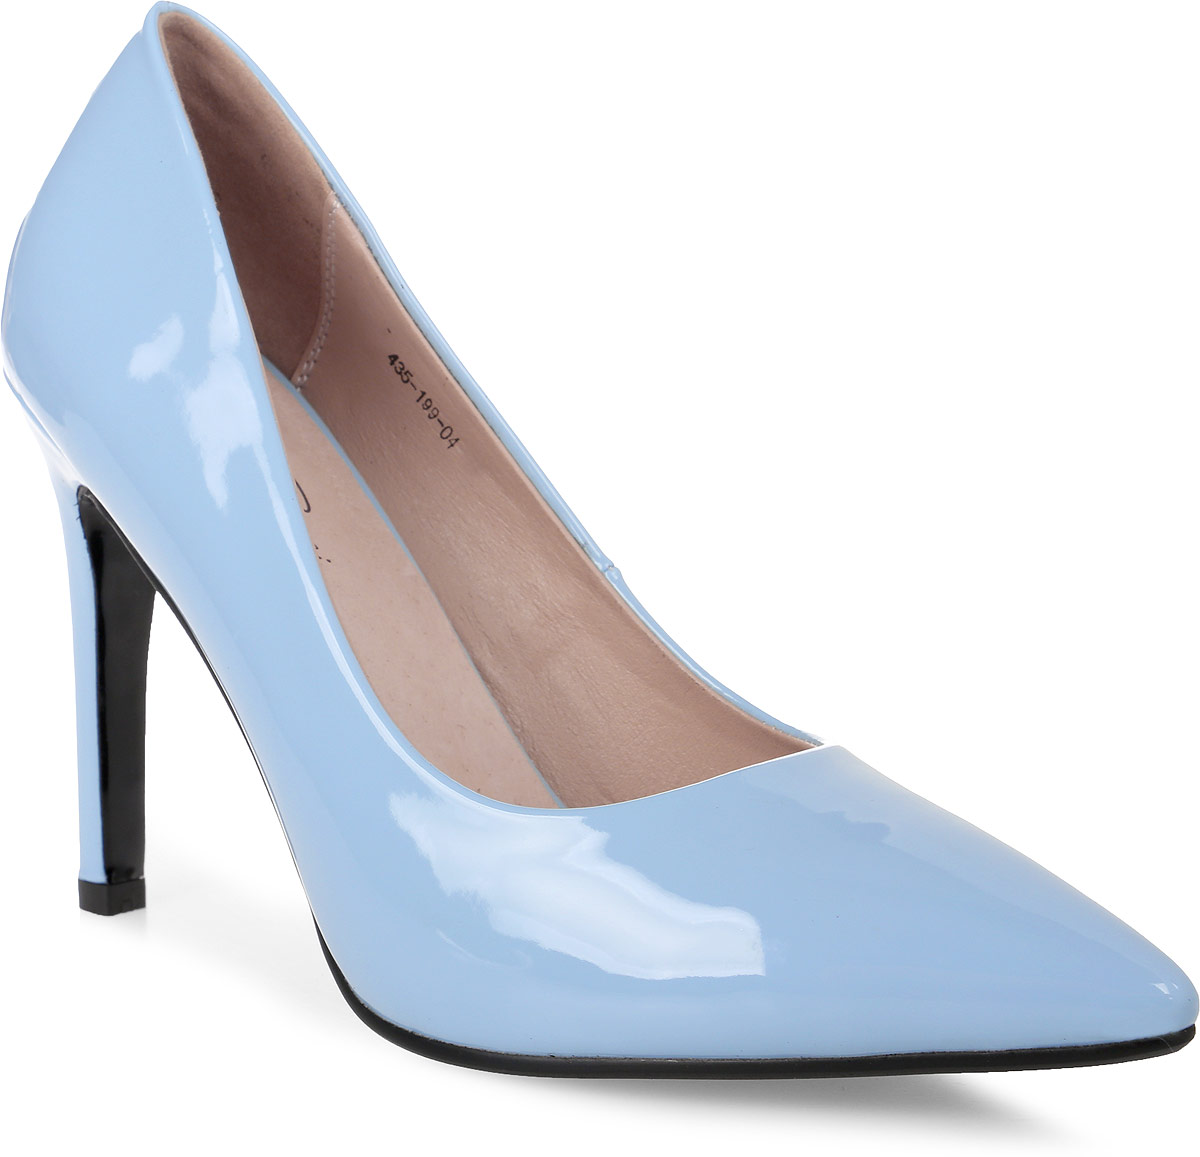 Туфли женские Dino Ricci, цвет: голубой. 435-199-04. Размер 36